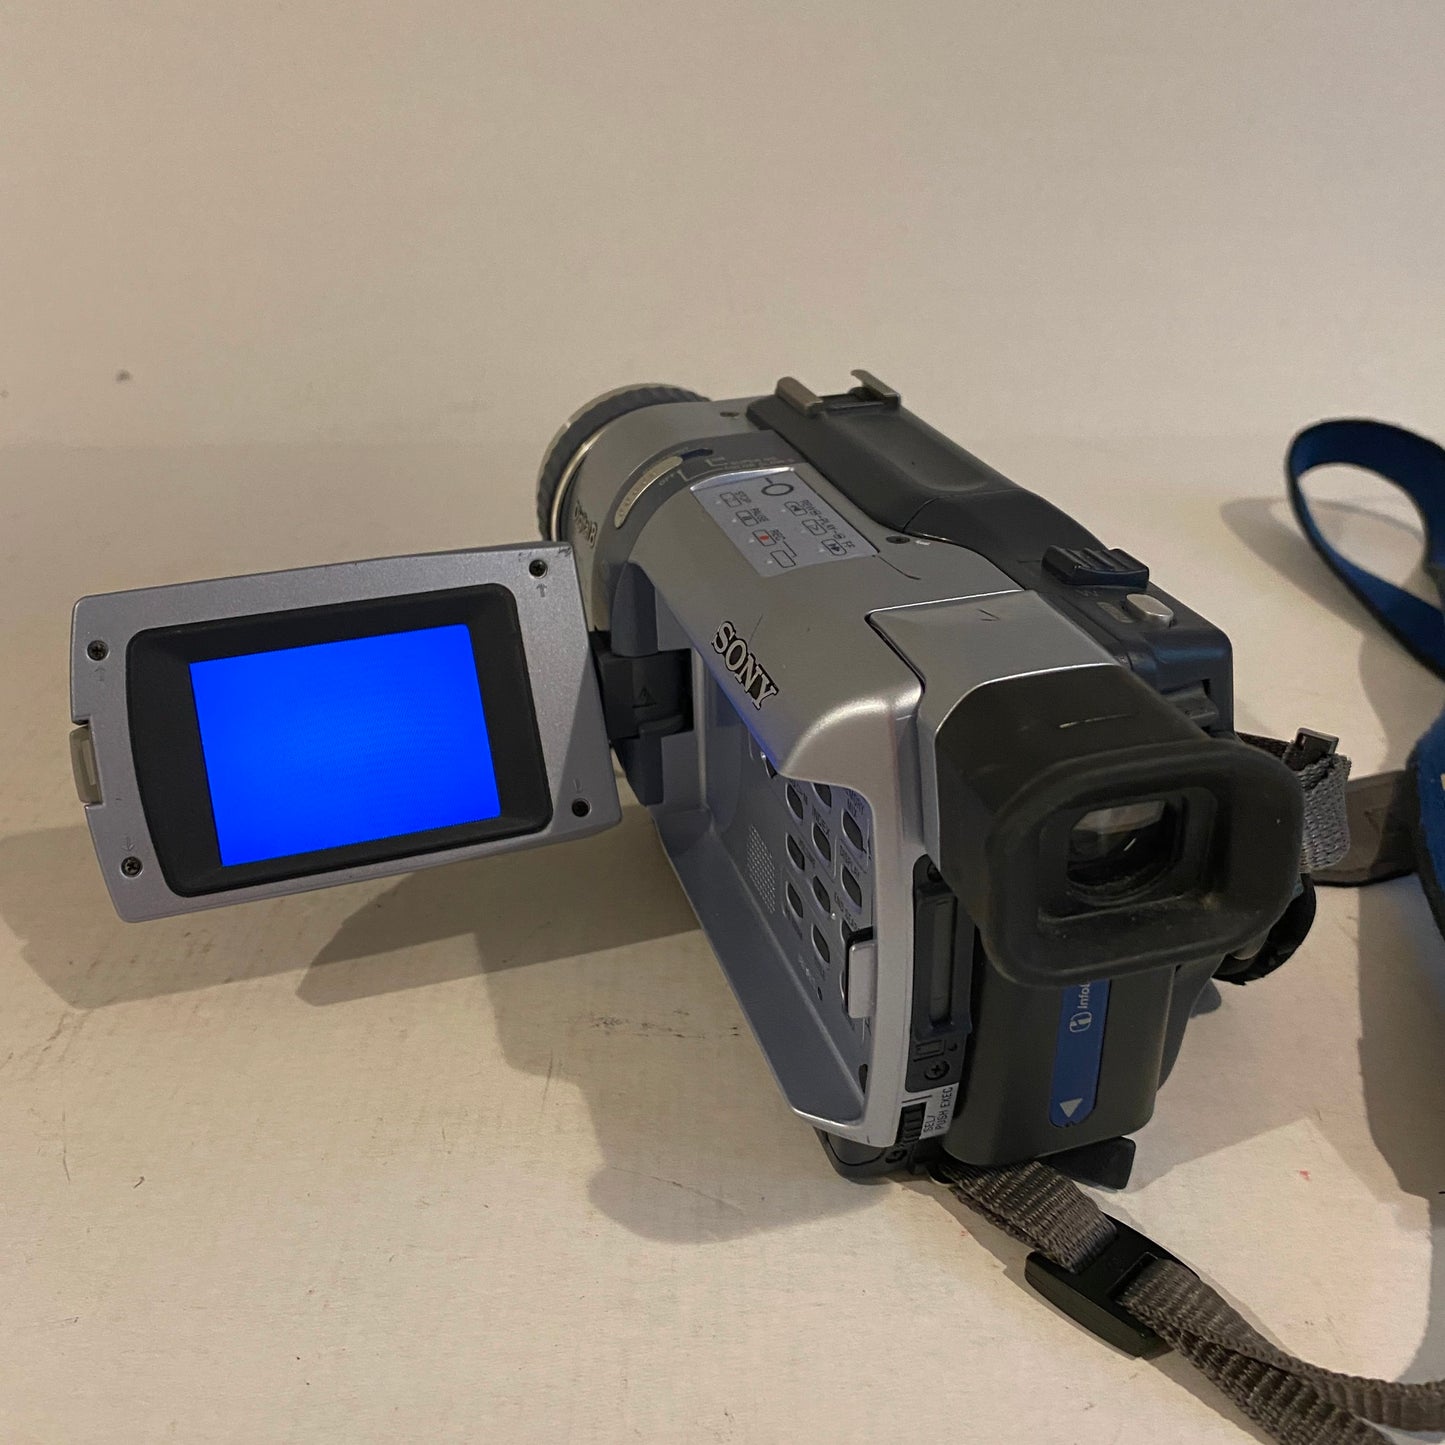 Sony NTSC Digital8 Handycam Camcorder - DCR-TRV340